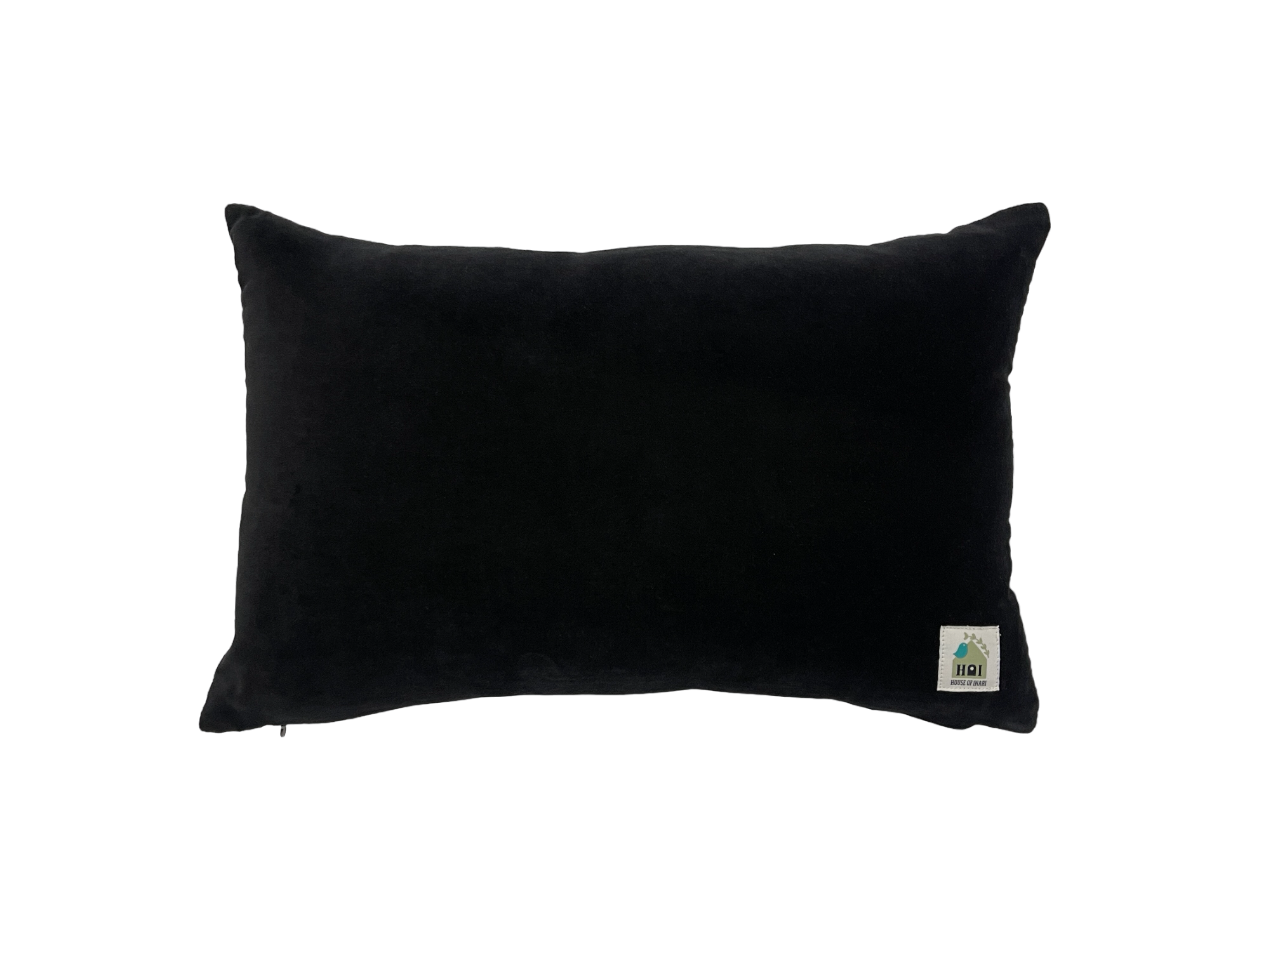 Wild Luxury Velvet Embroidered Black Cushion Cover